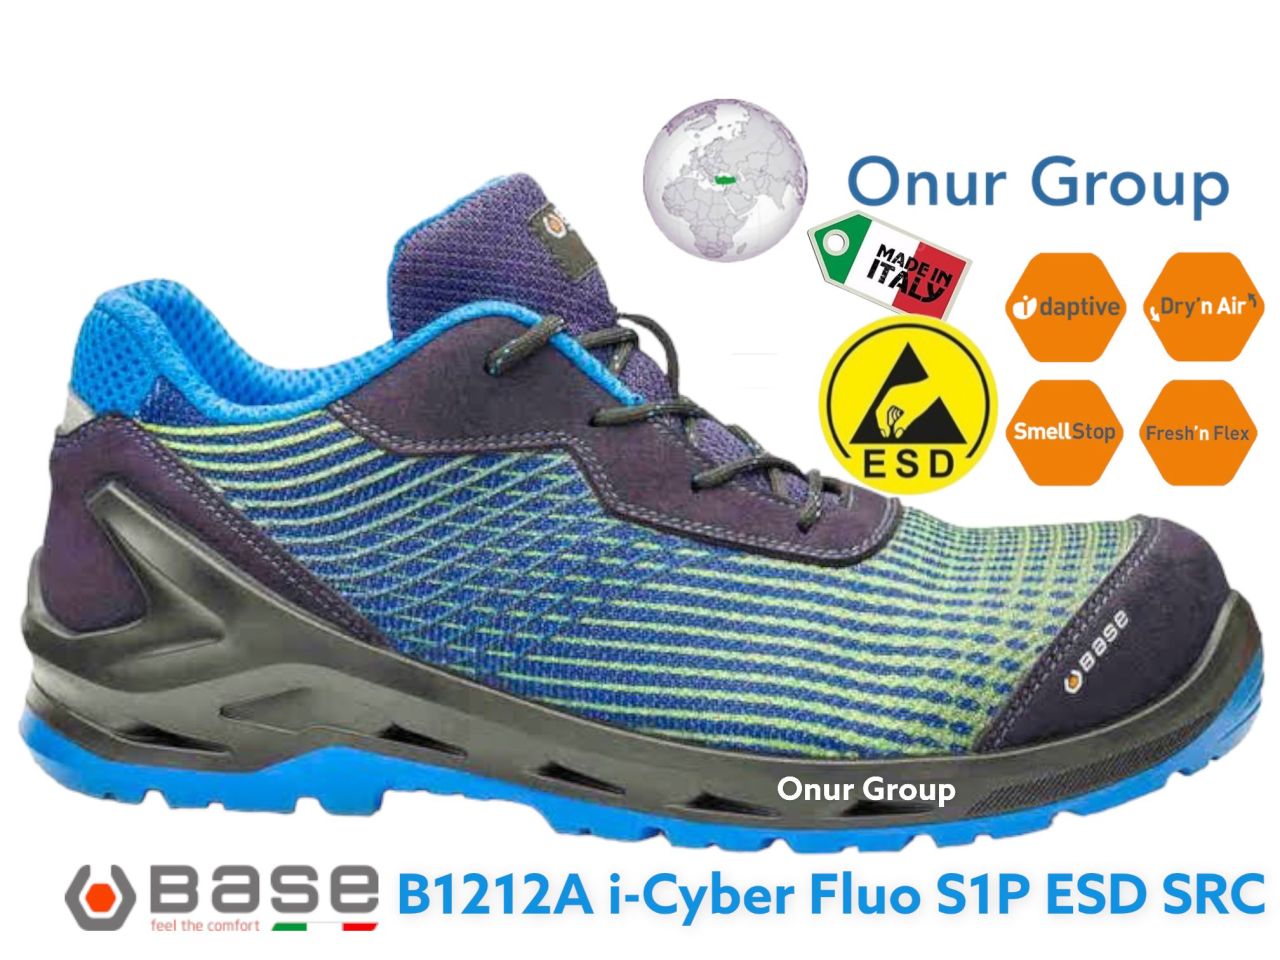 Base B1212A i-Cyber Fluo S1P ESD SRC